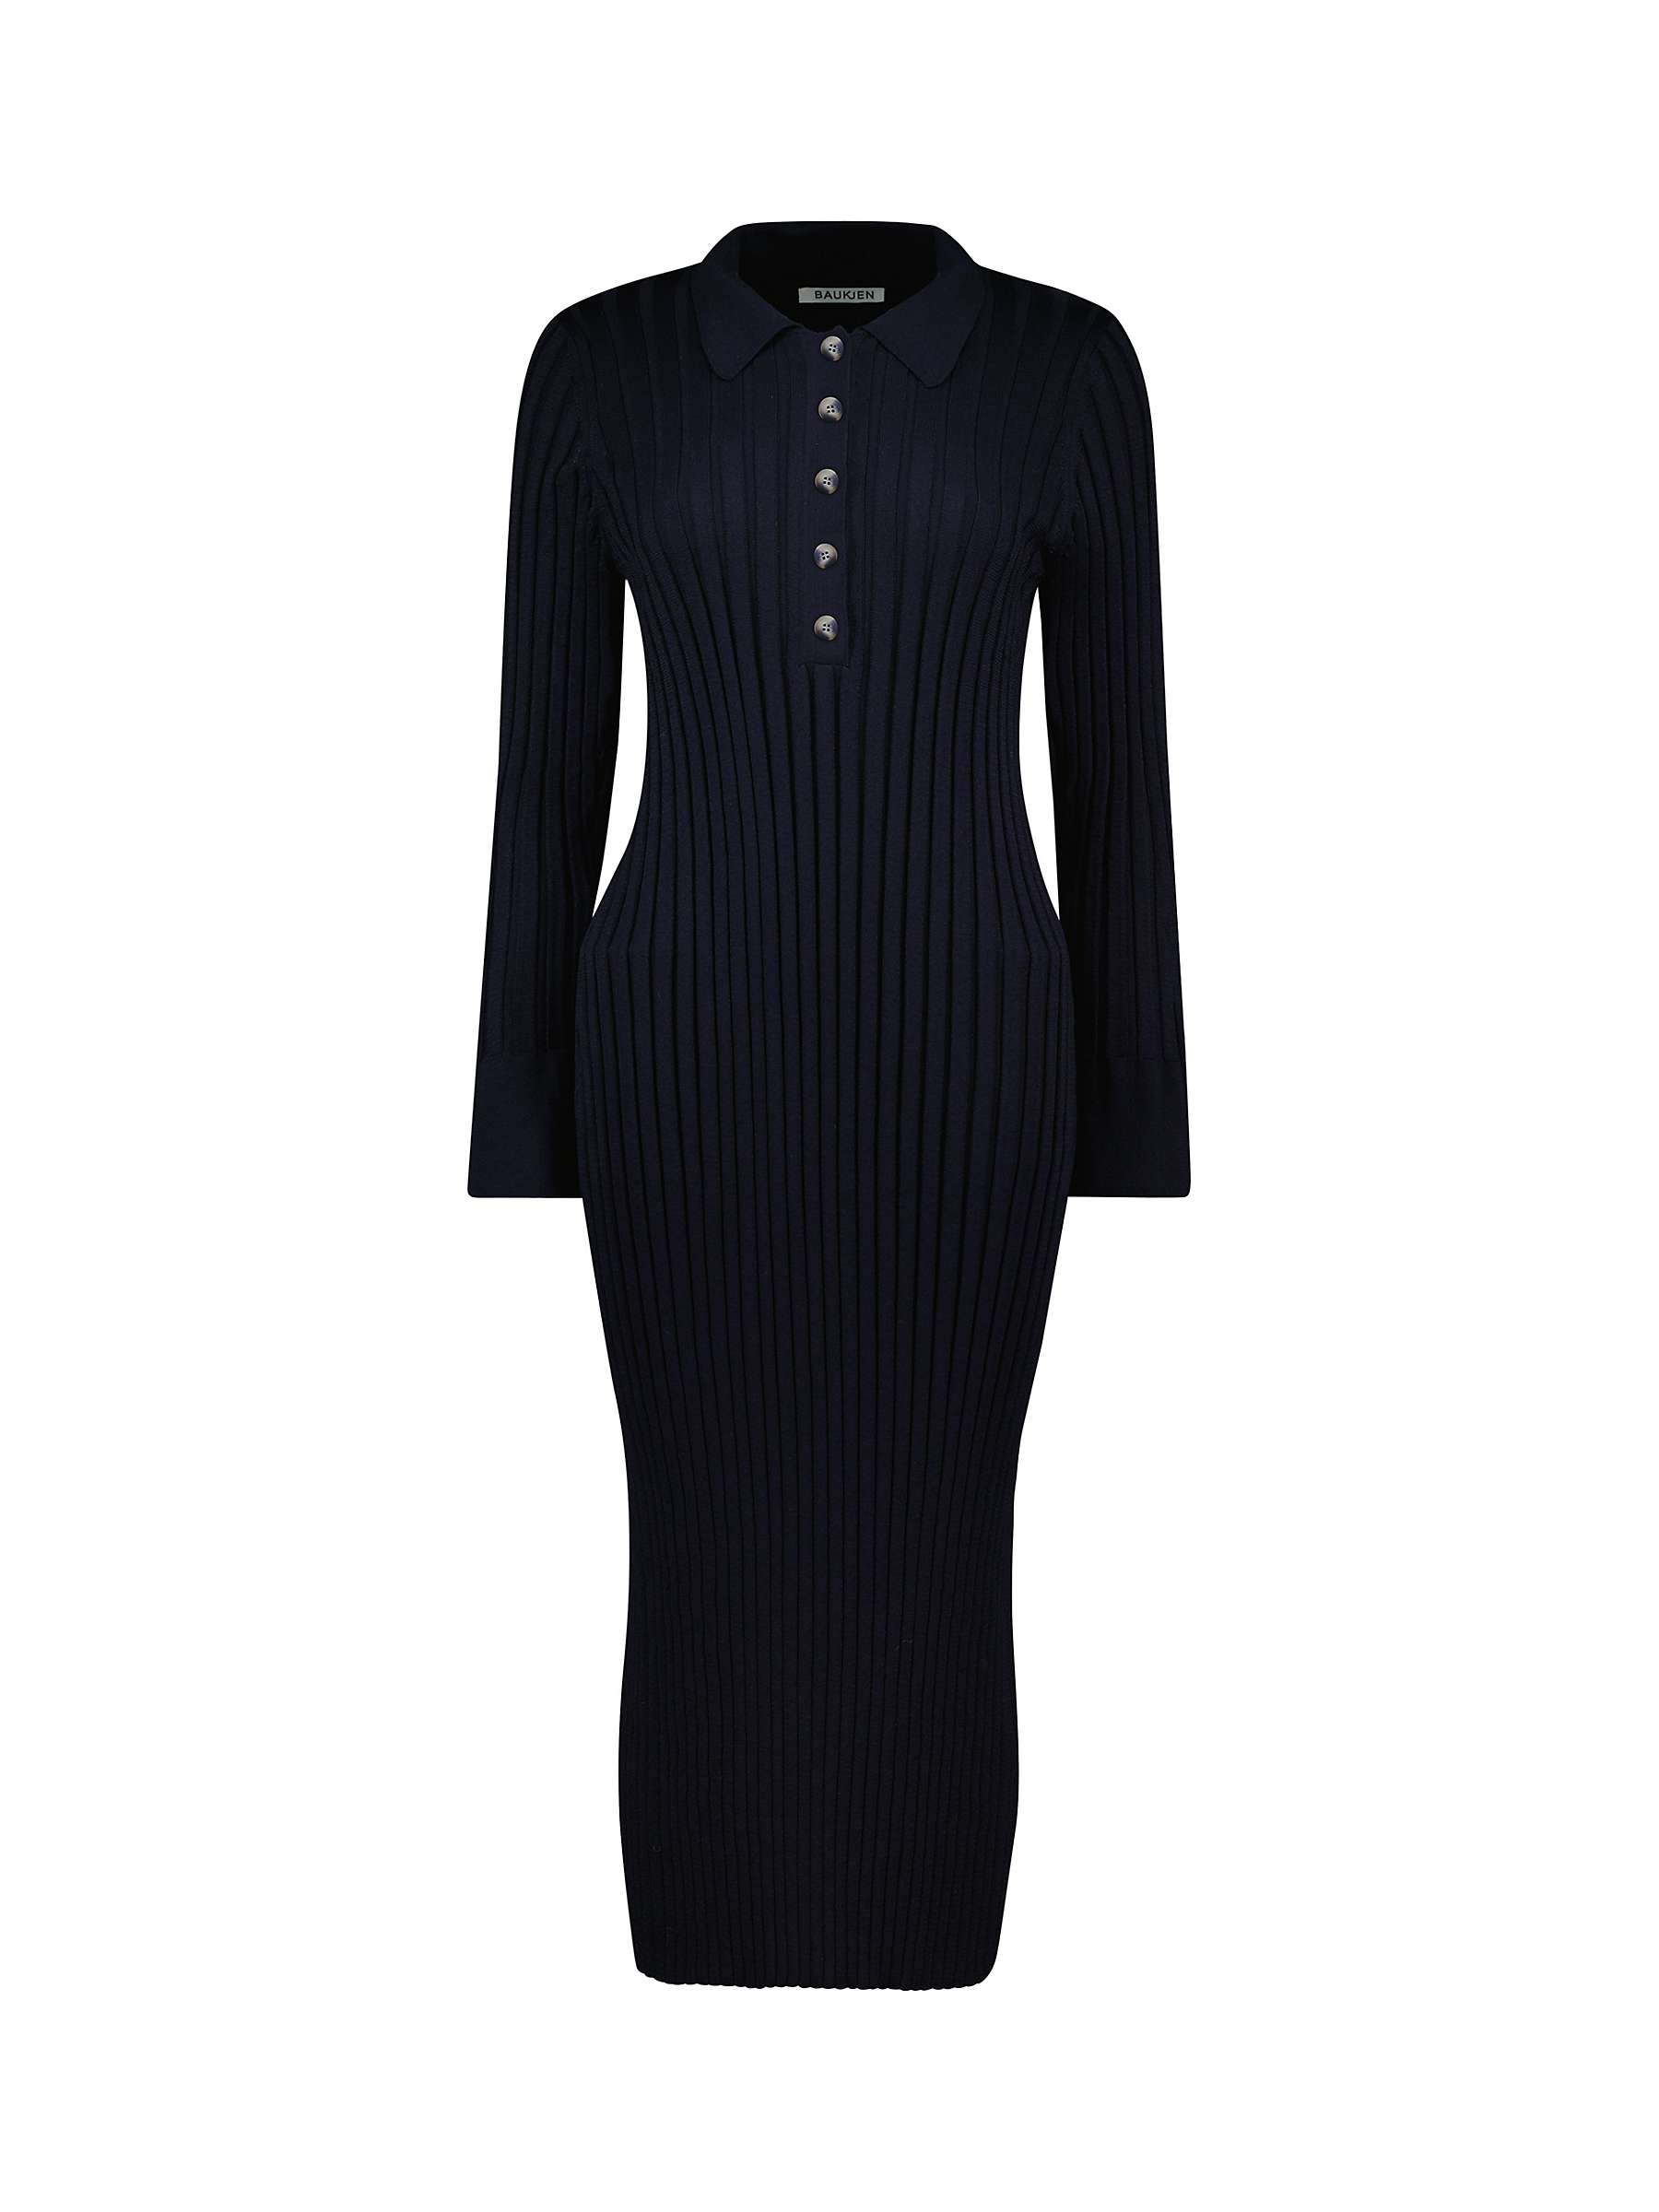 Buy Baukjen Cece Rib Knit Midi Dress, Navy Online at johnlewis.com